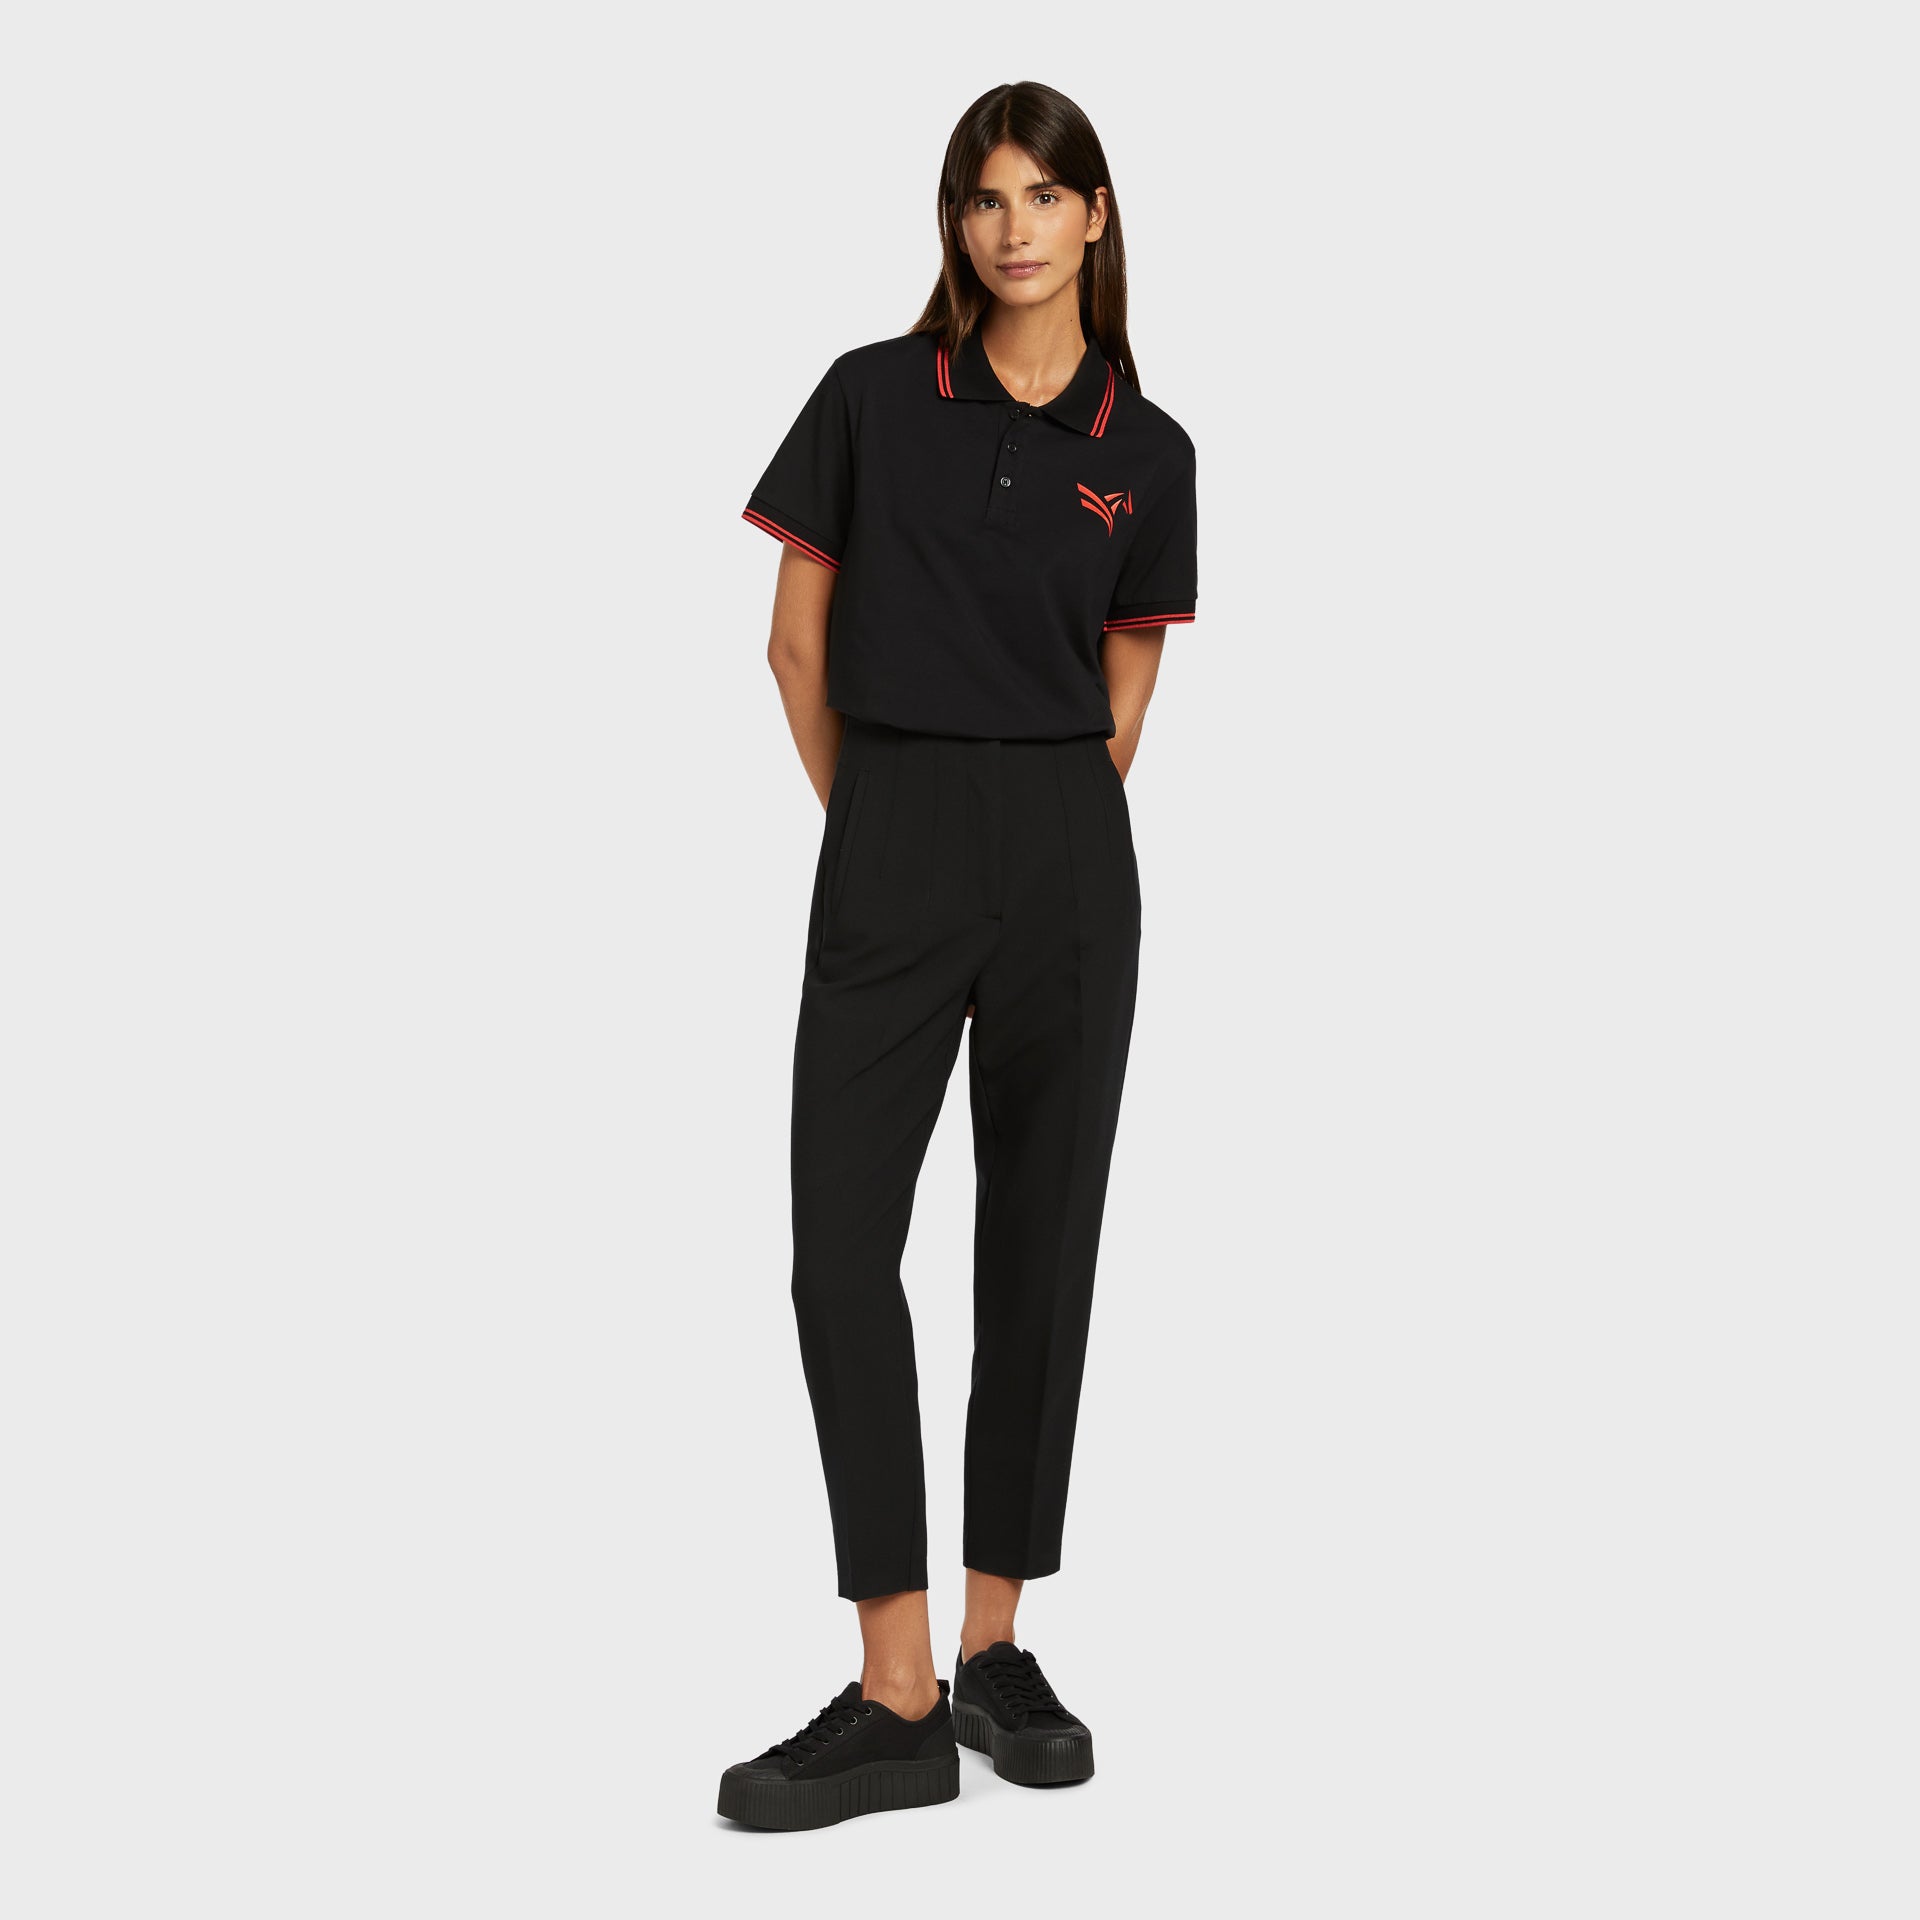 GCL Essentials Unisex Polo Shirt Black